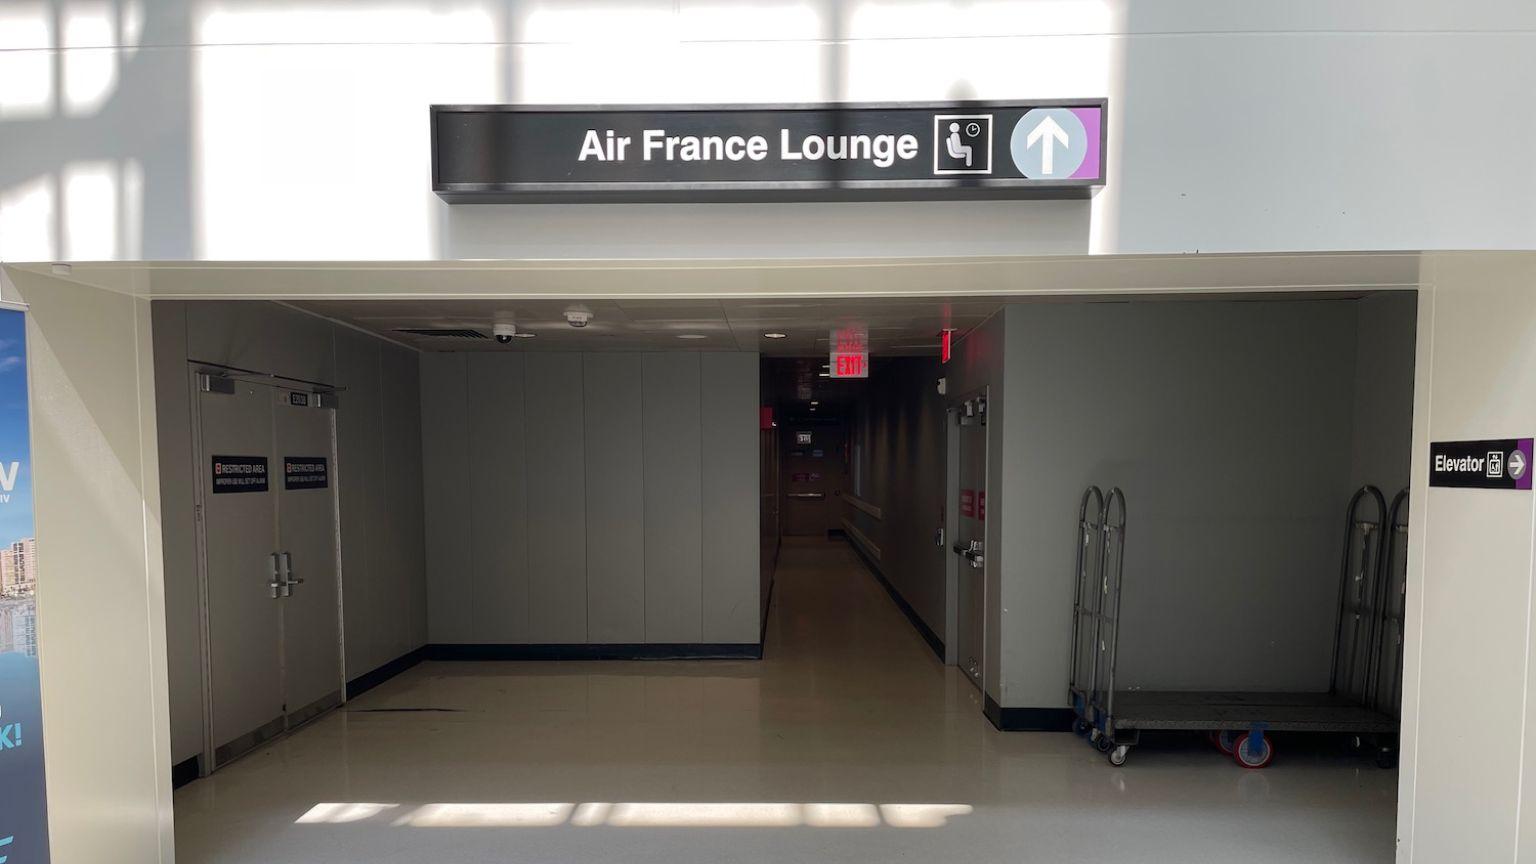 Air France Lounge Boston, Terminal E